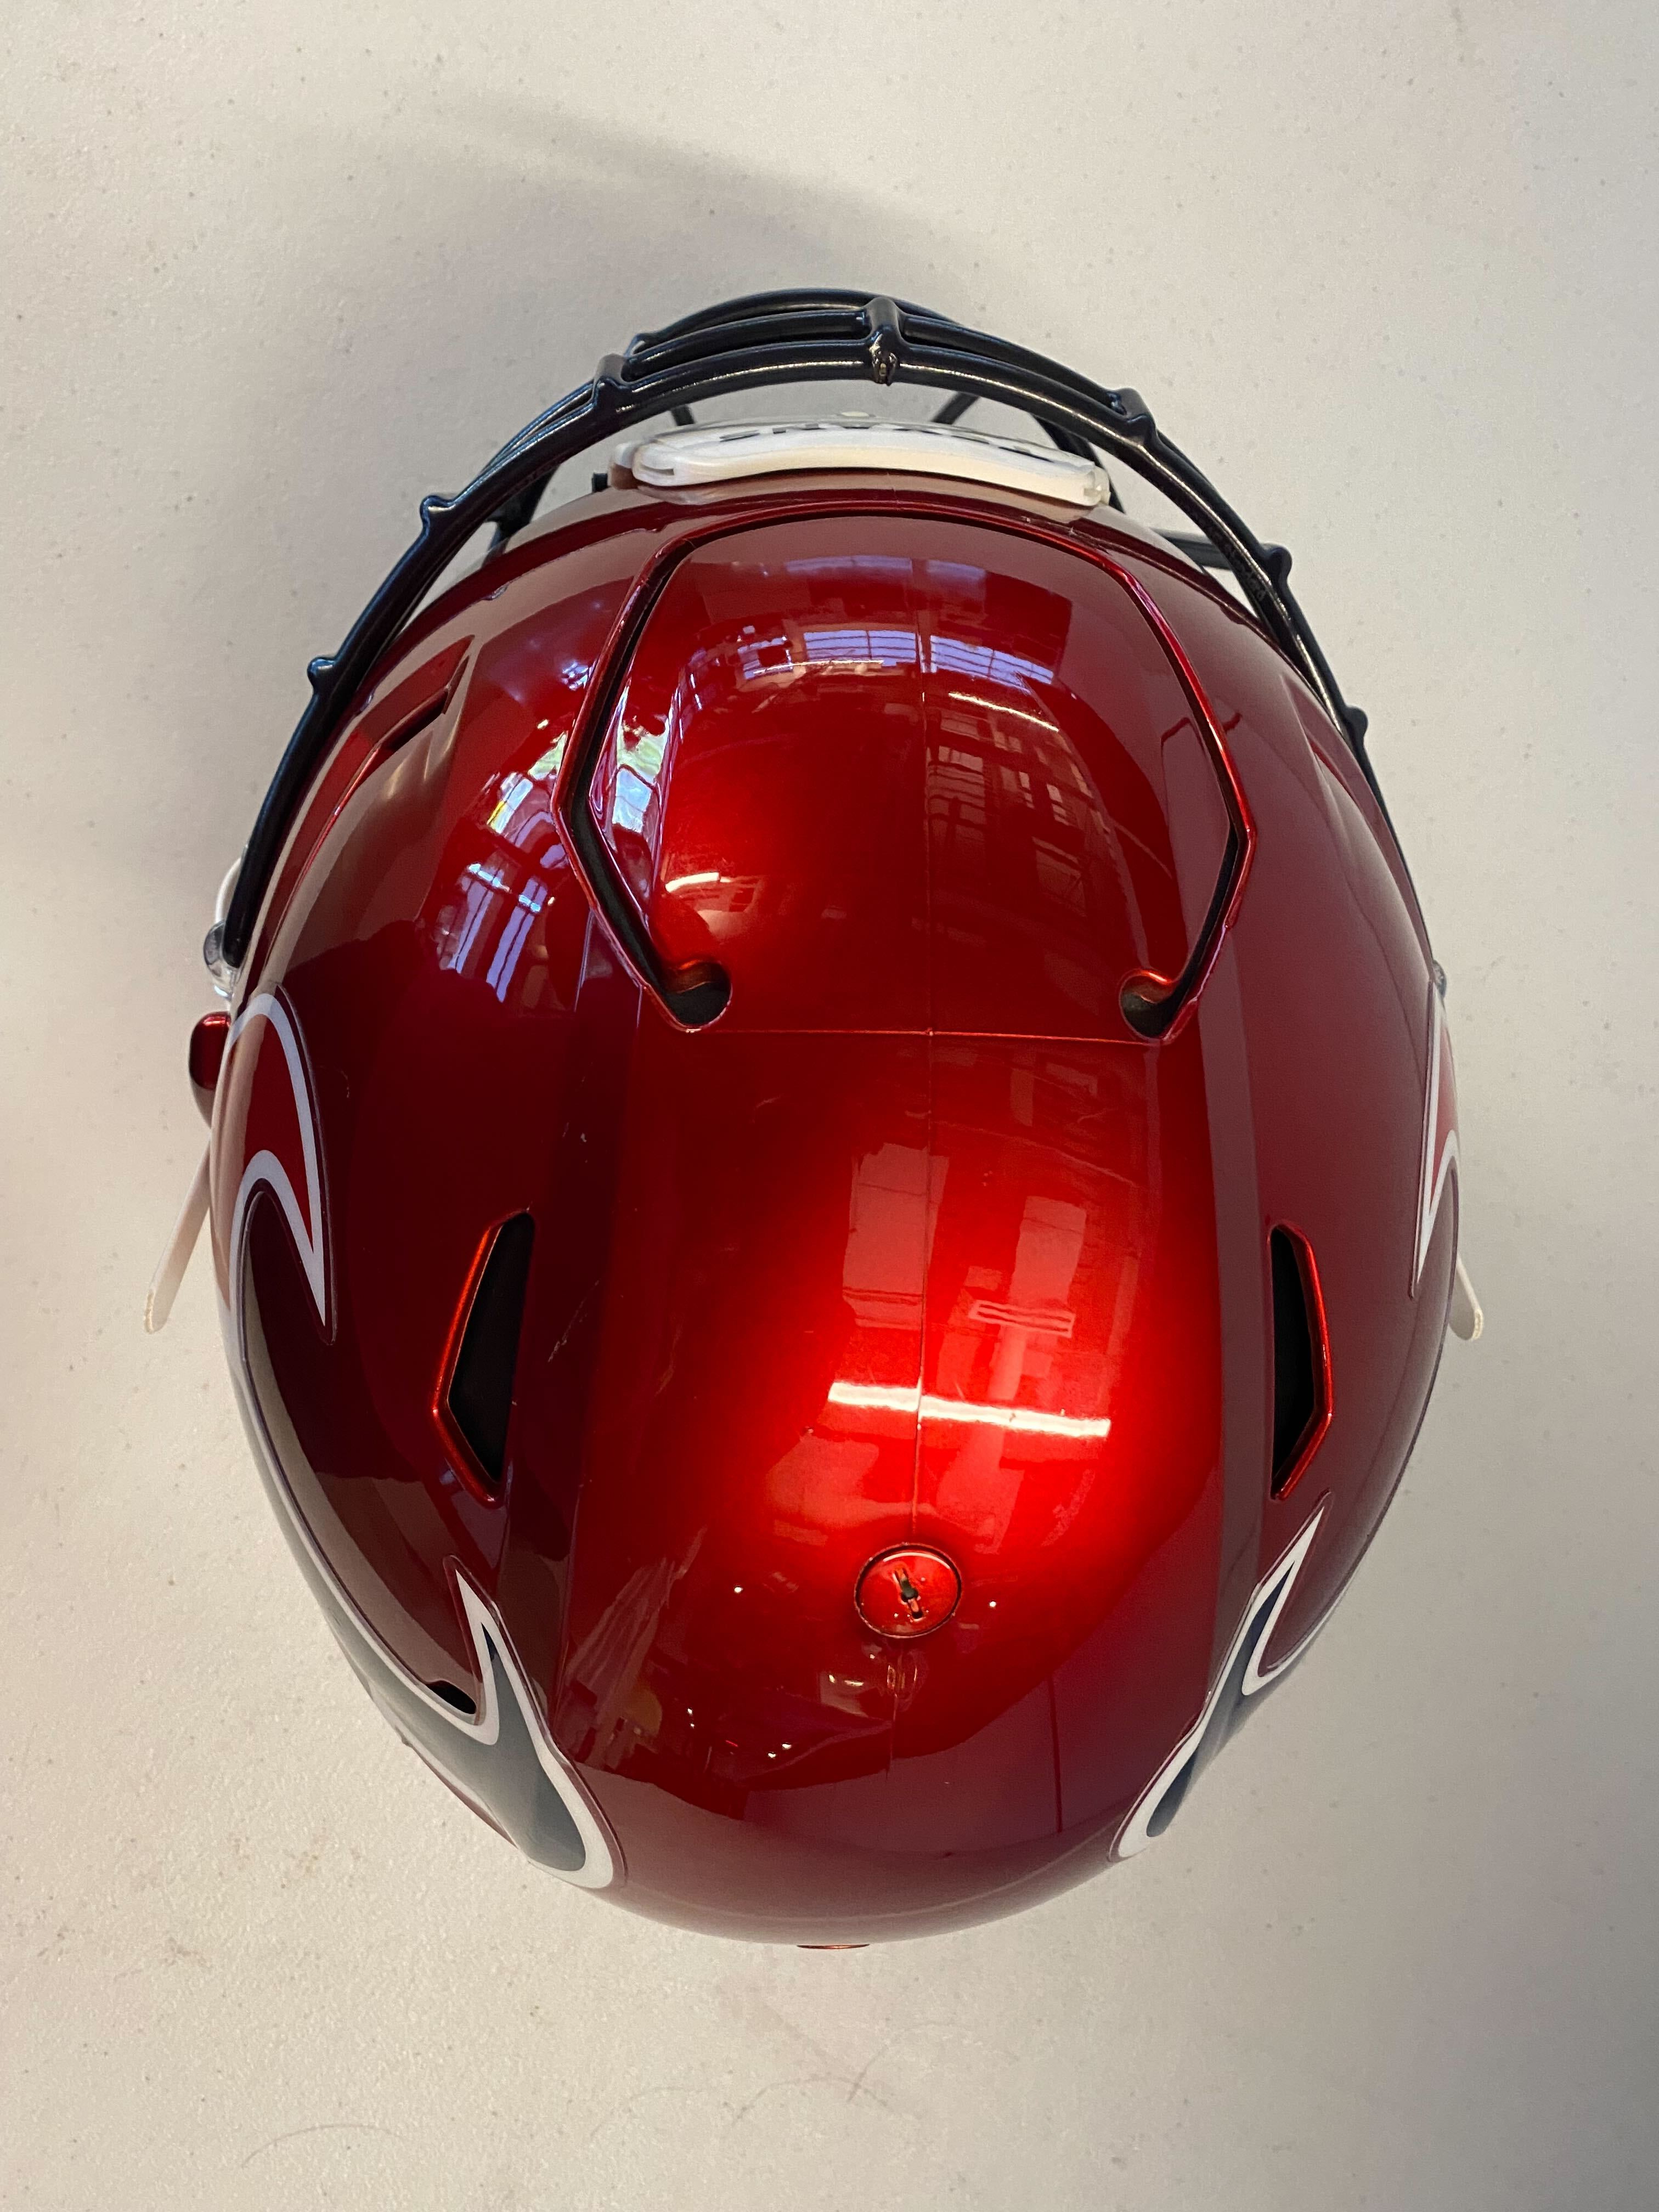 PHOTOS: Houston Texans unveil new 'Battle Red' helmet for 2022 season